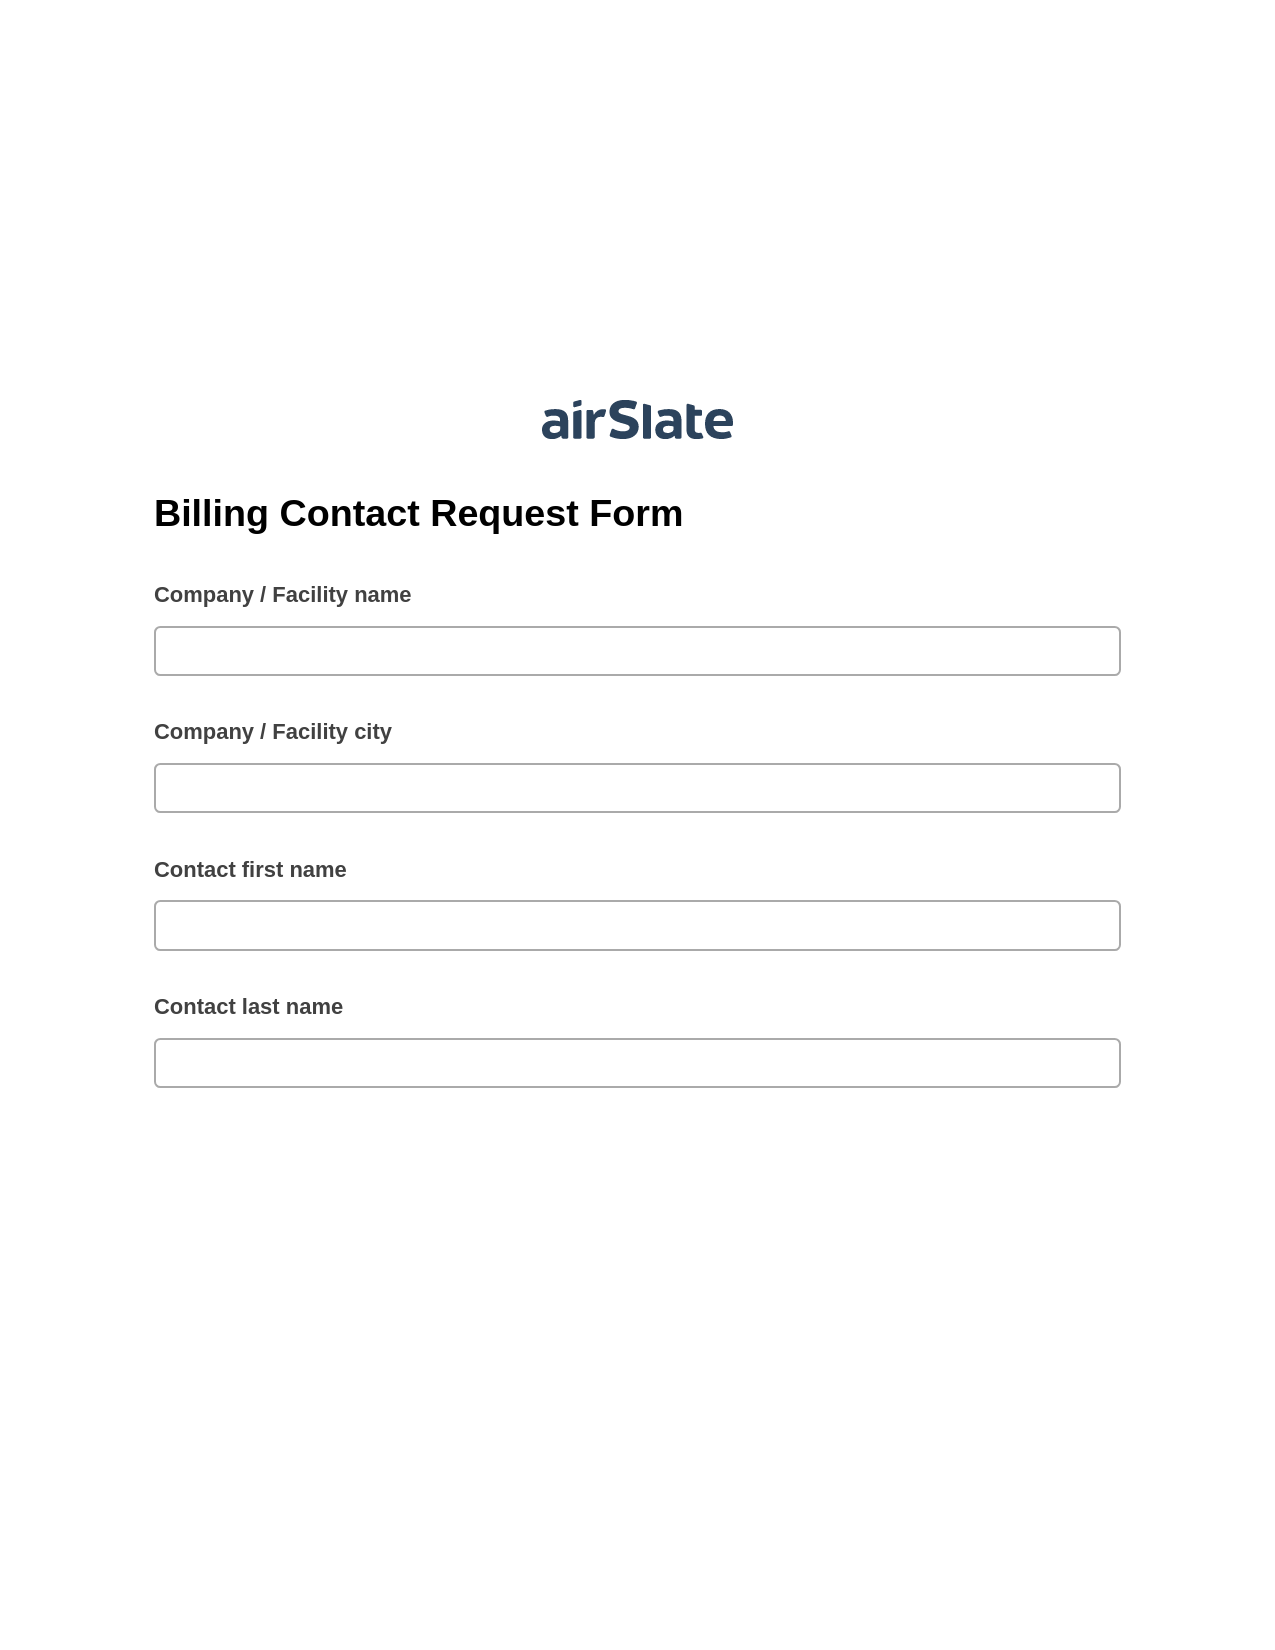 Multirole Billing Contact Request Form Pre-fill Dropdowns from Google Sheet Bot, Webhook Bot, OneDrive Bot